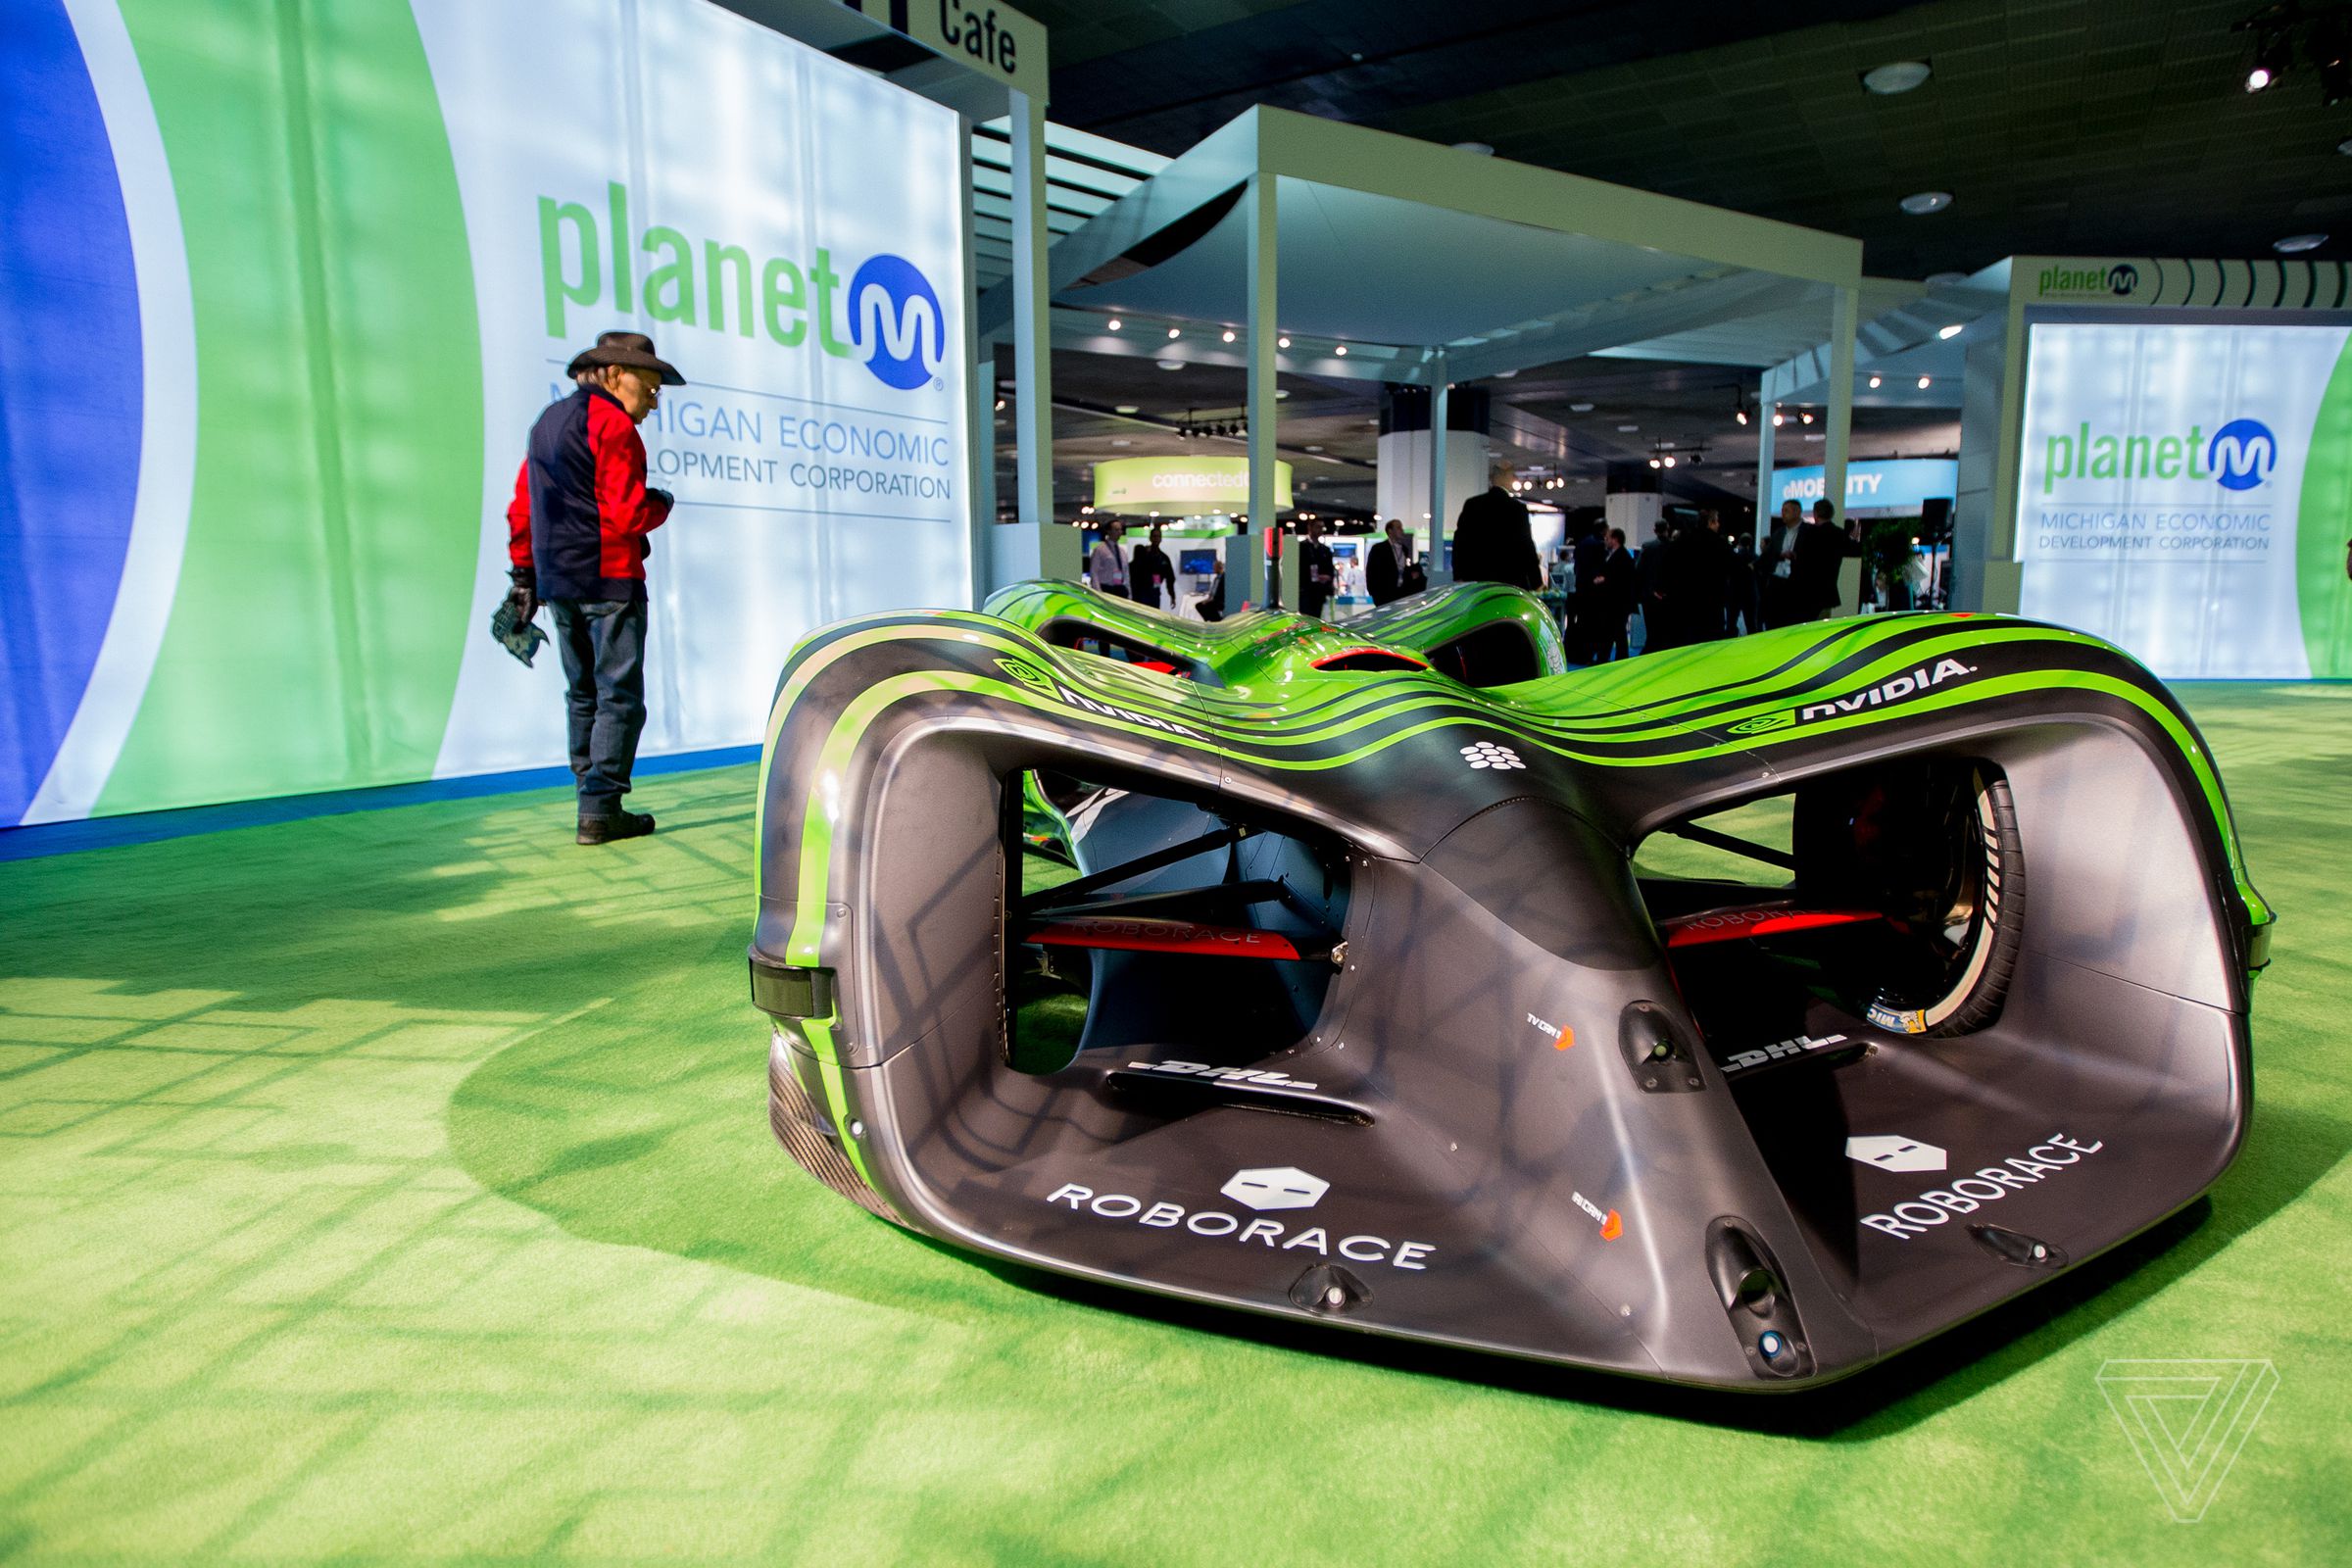 This is the Roborace Robocar, a fully autonomous racecar created by YotaPhone designer Denis Sverdlov. 